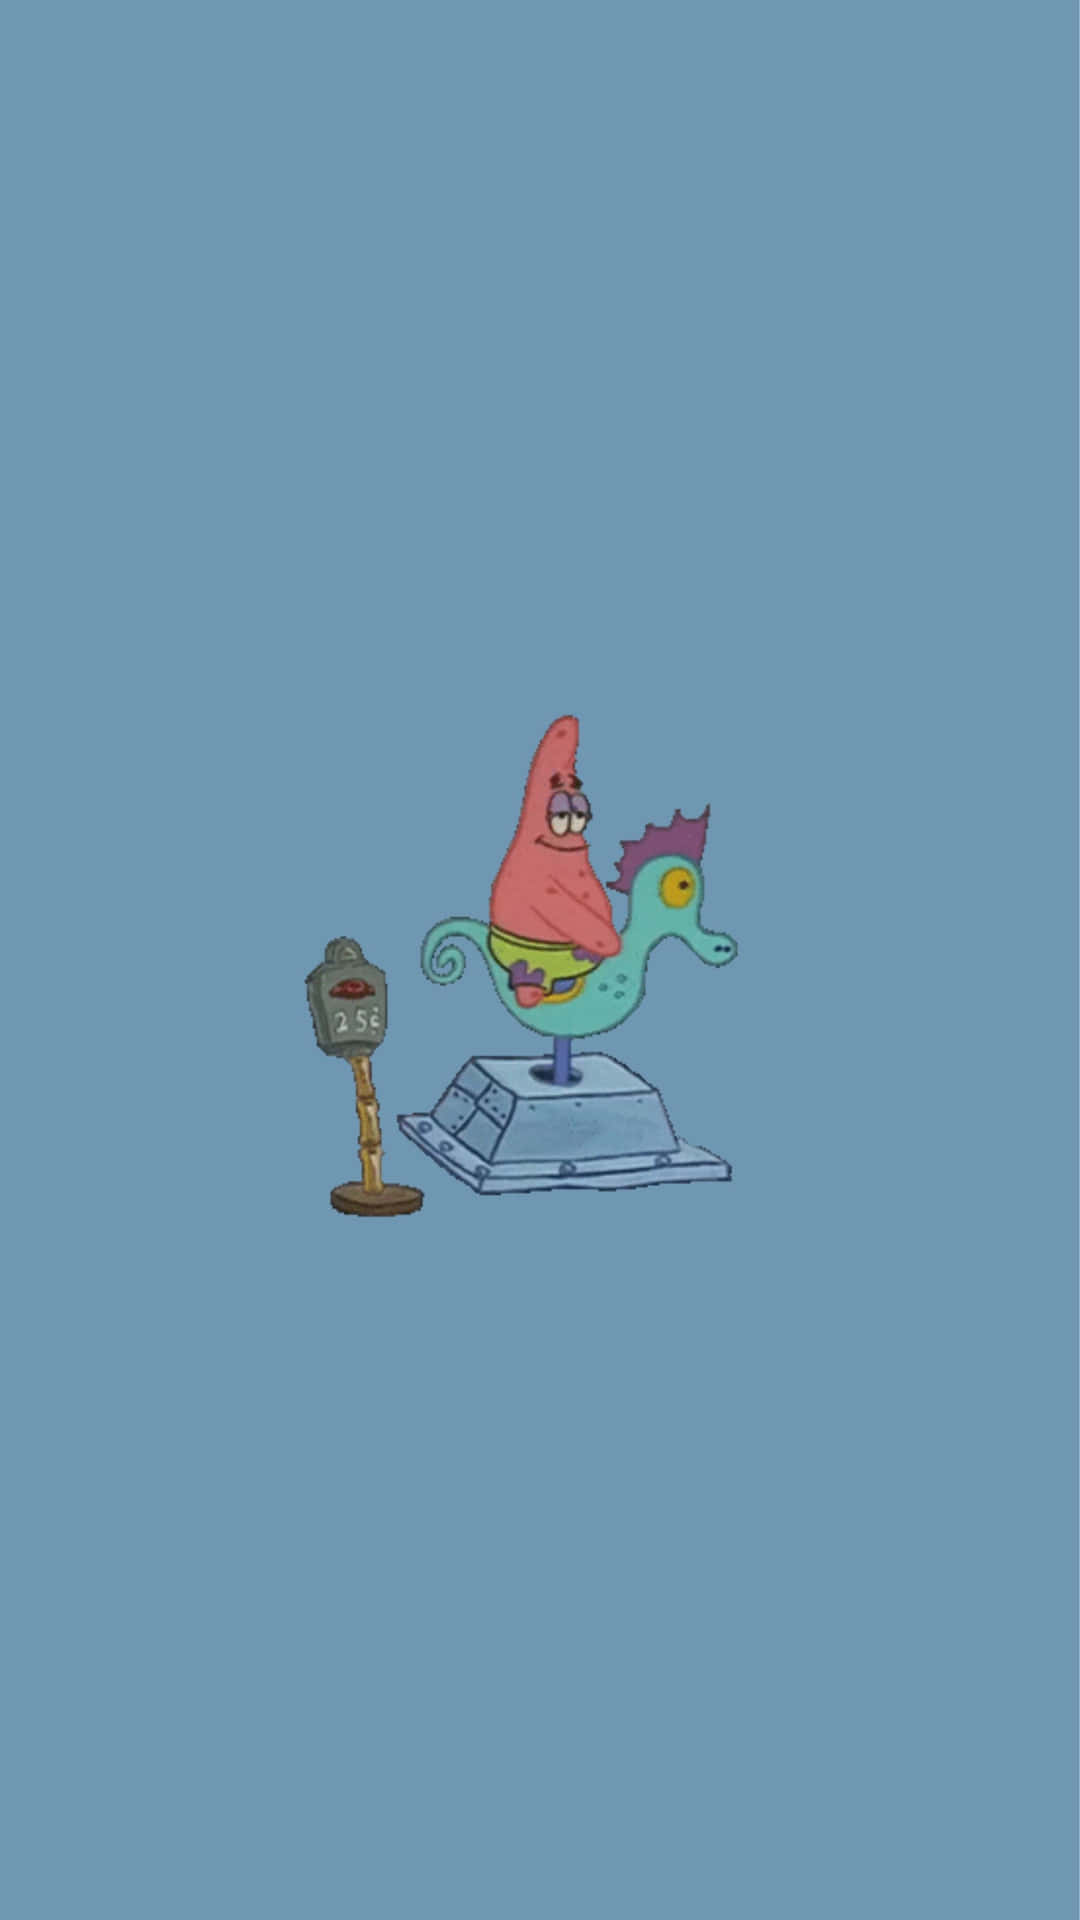 Spongebob Squarepants på en båd Wallpaper